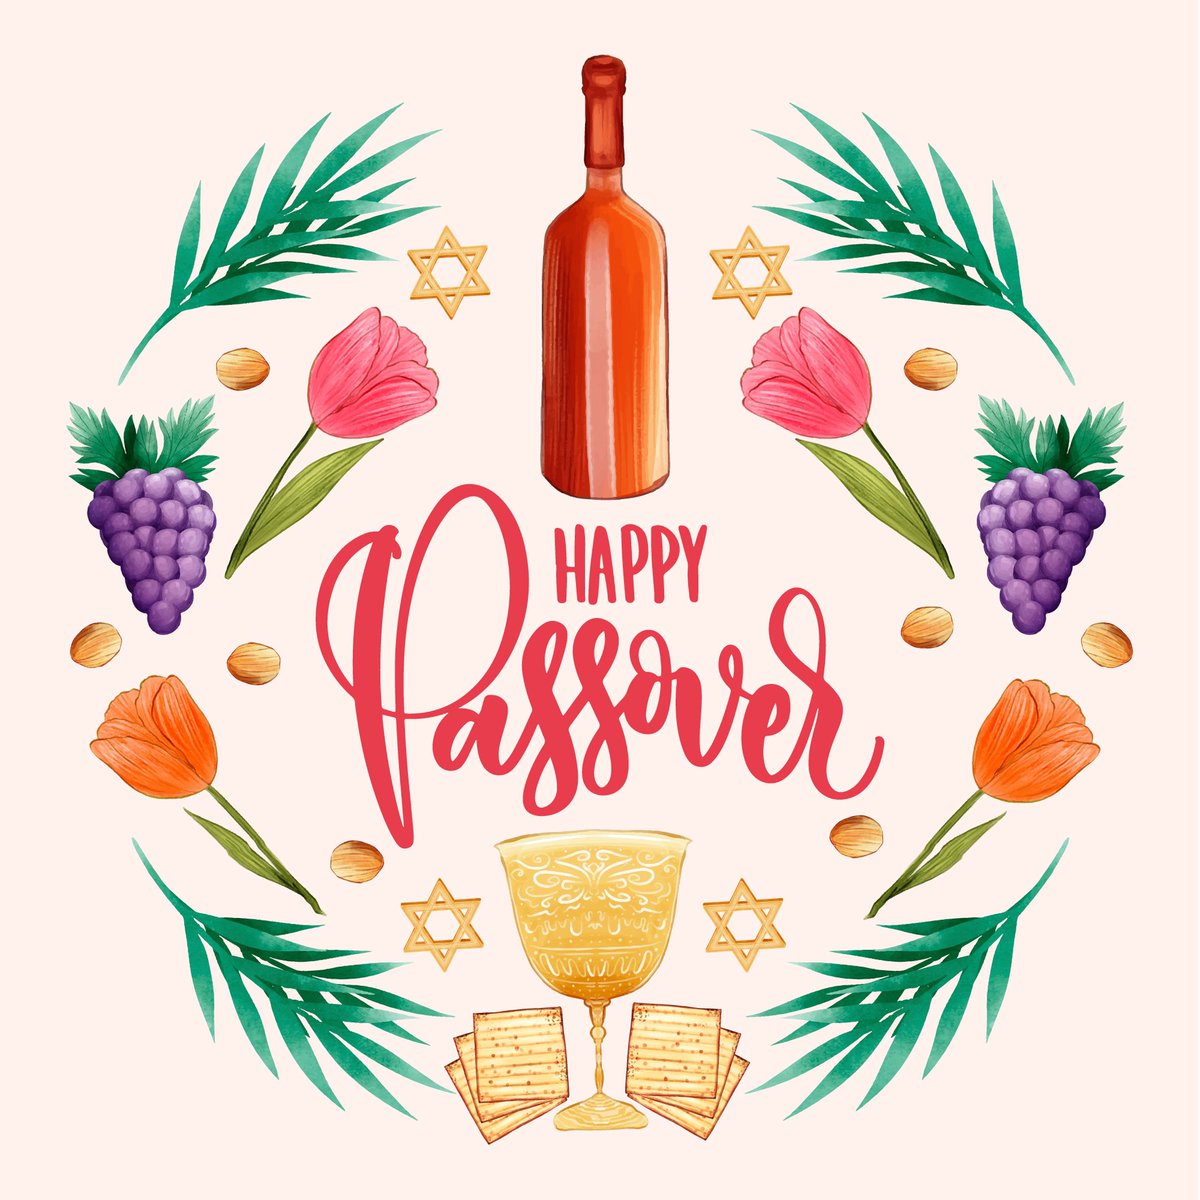 Wishing all Jewish communities a Happy Passover. Chag Pesach Sameach.